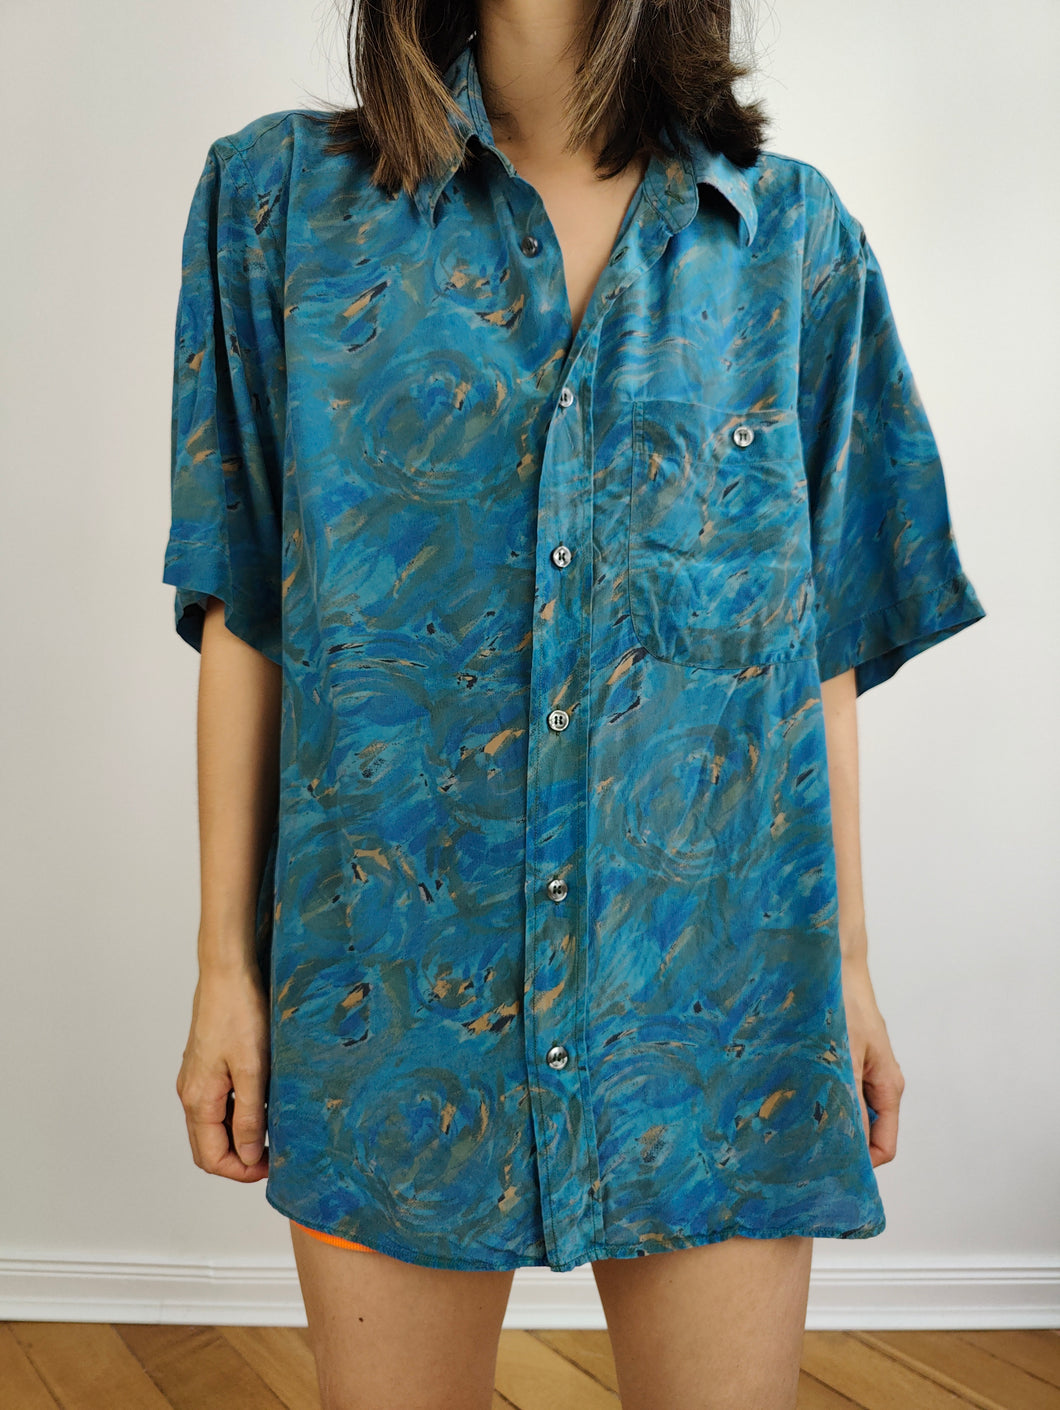 The Silk Pierre Cardin Blue Pattern Blouse | Vintage designer impressionism art print short sleeve button up shirt unisex men 42 L